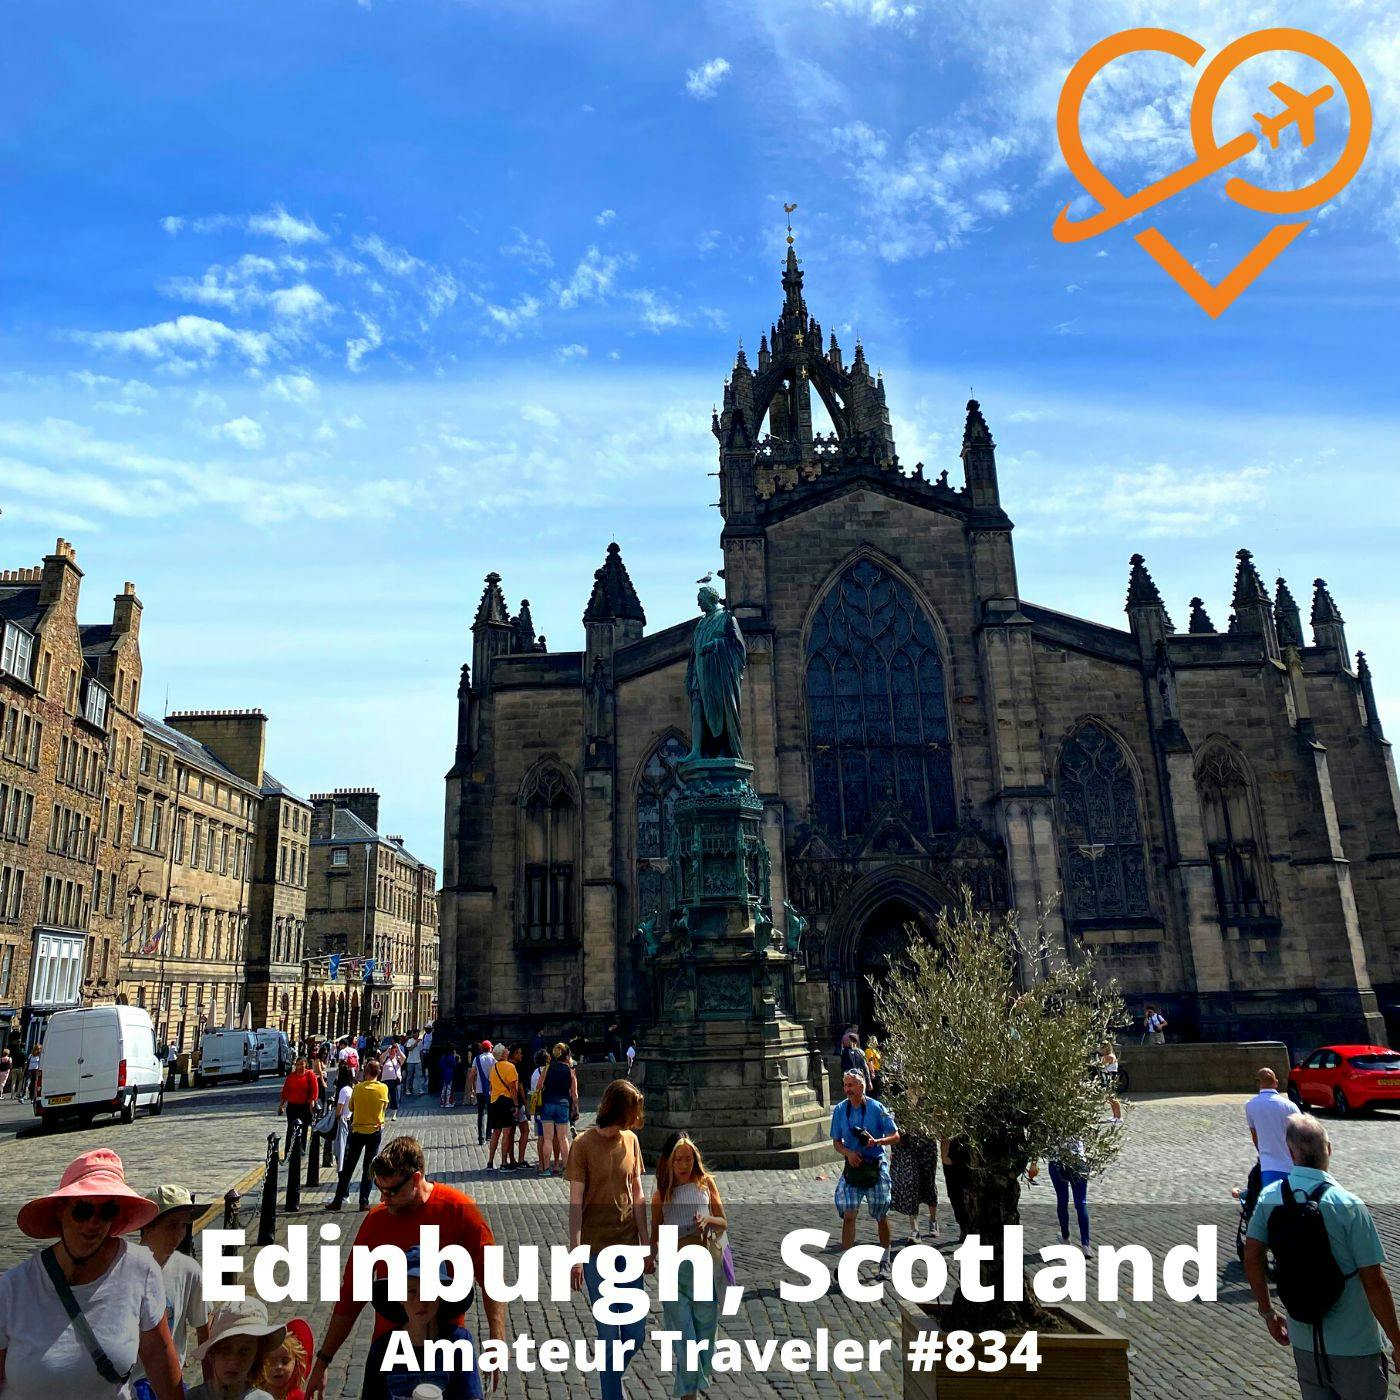 AT#834 - Travel to  Edinburgh, Scotland